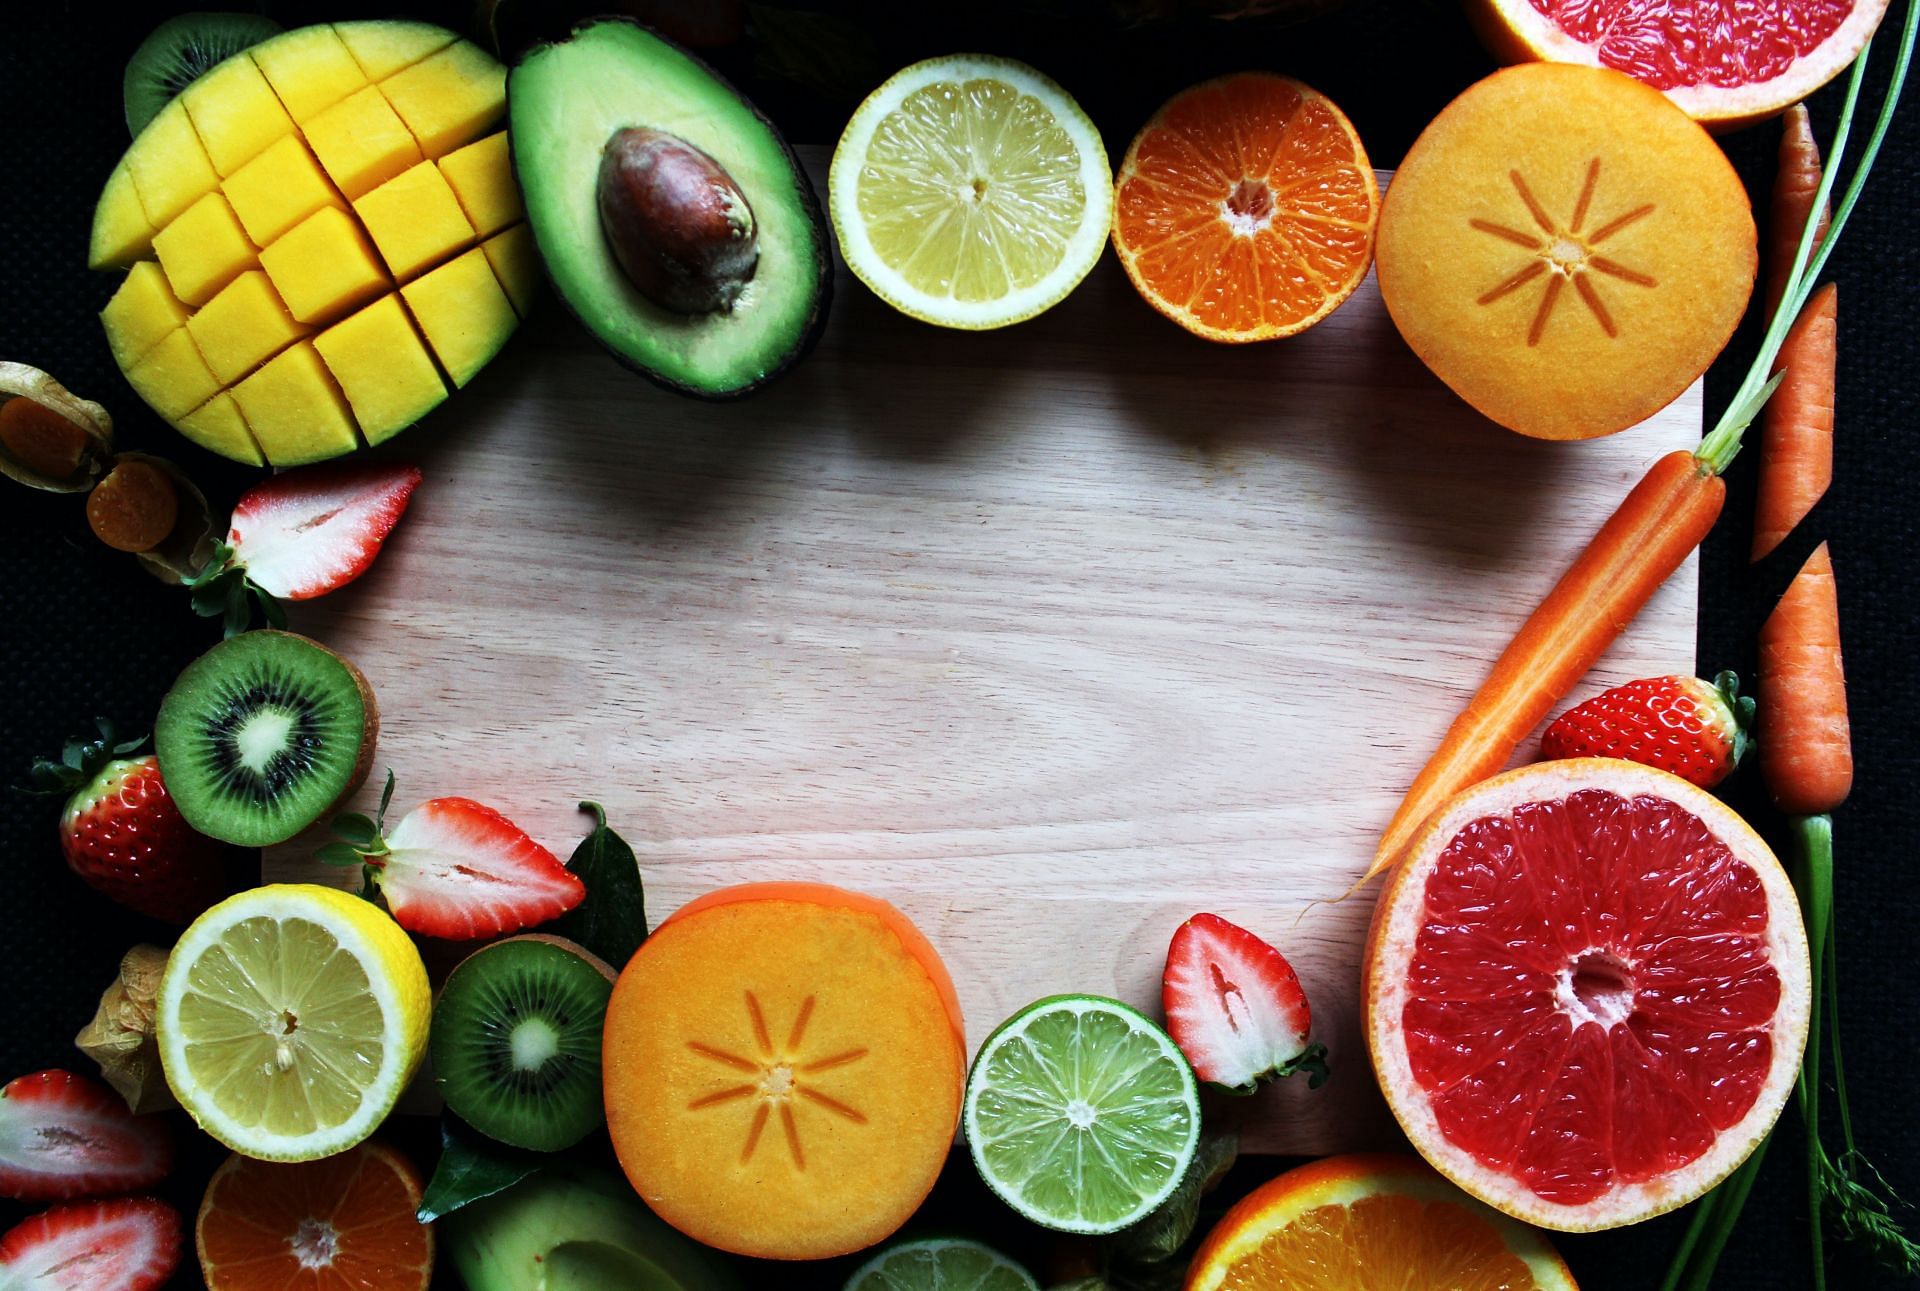 Citrus fruits are among the foods good for liver health. (Image via Unsplash/Amoon Ra)